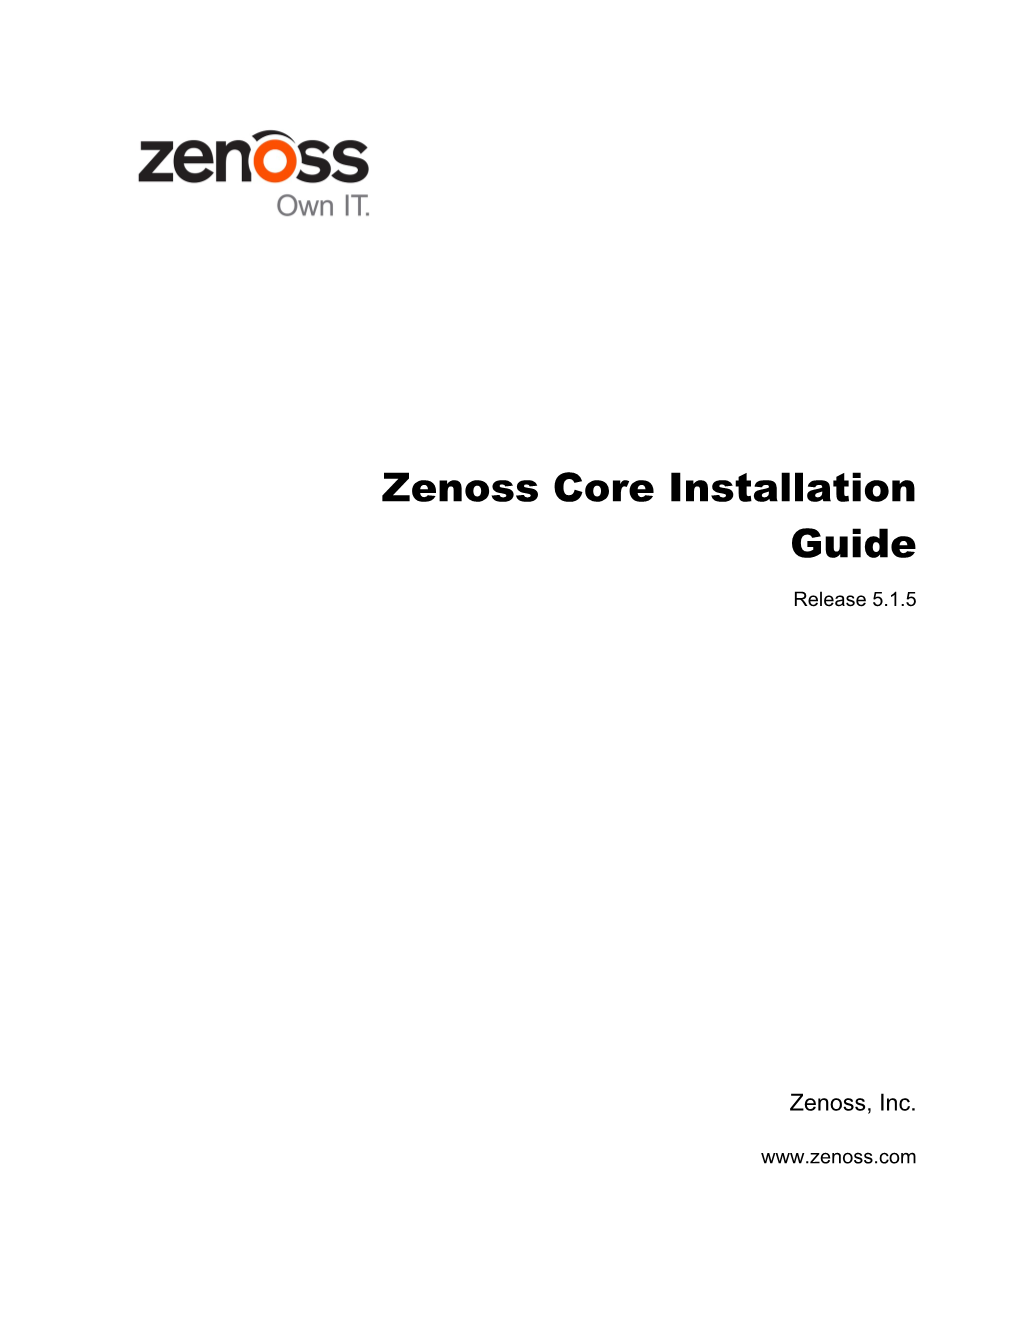 Zenoss Core Installation Guide